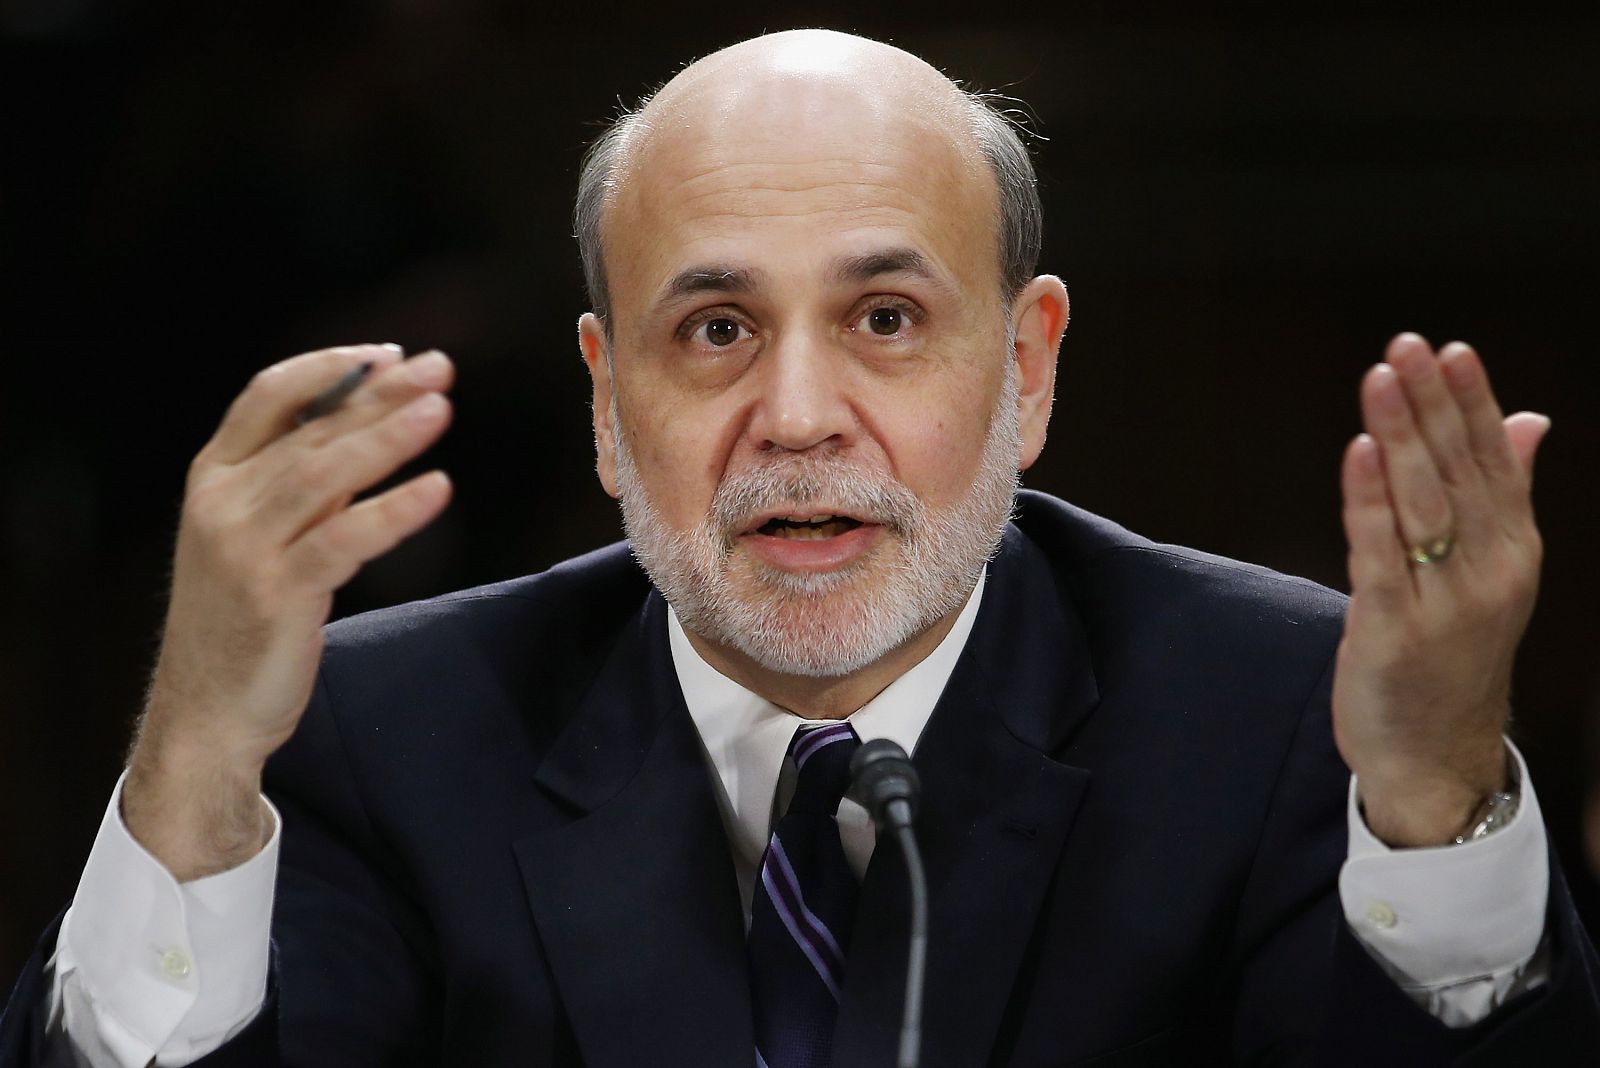 Ben Bernanke, presidente de la Reserva Federal